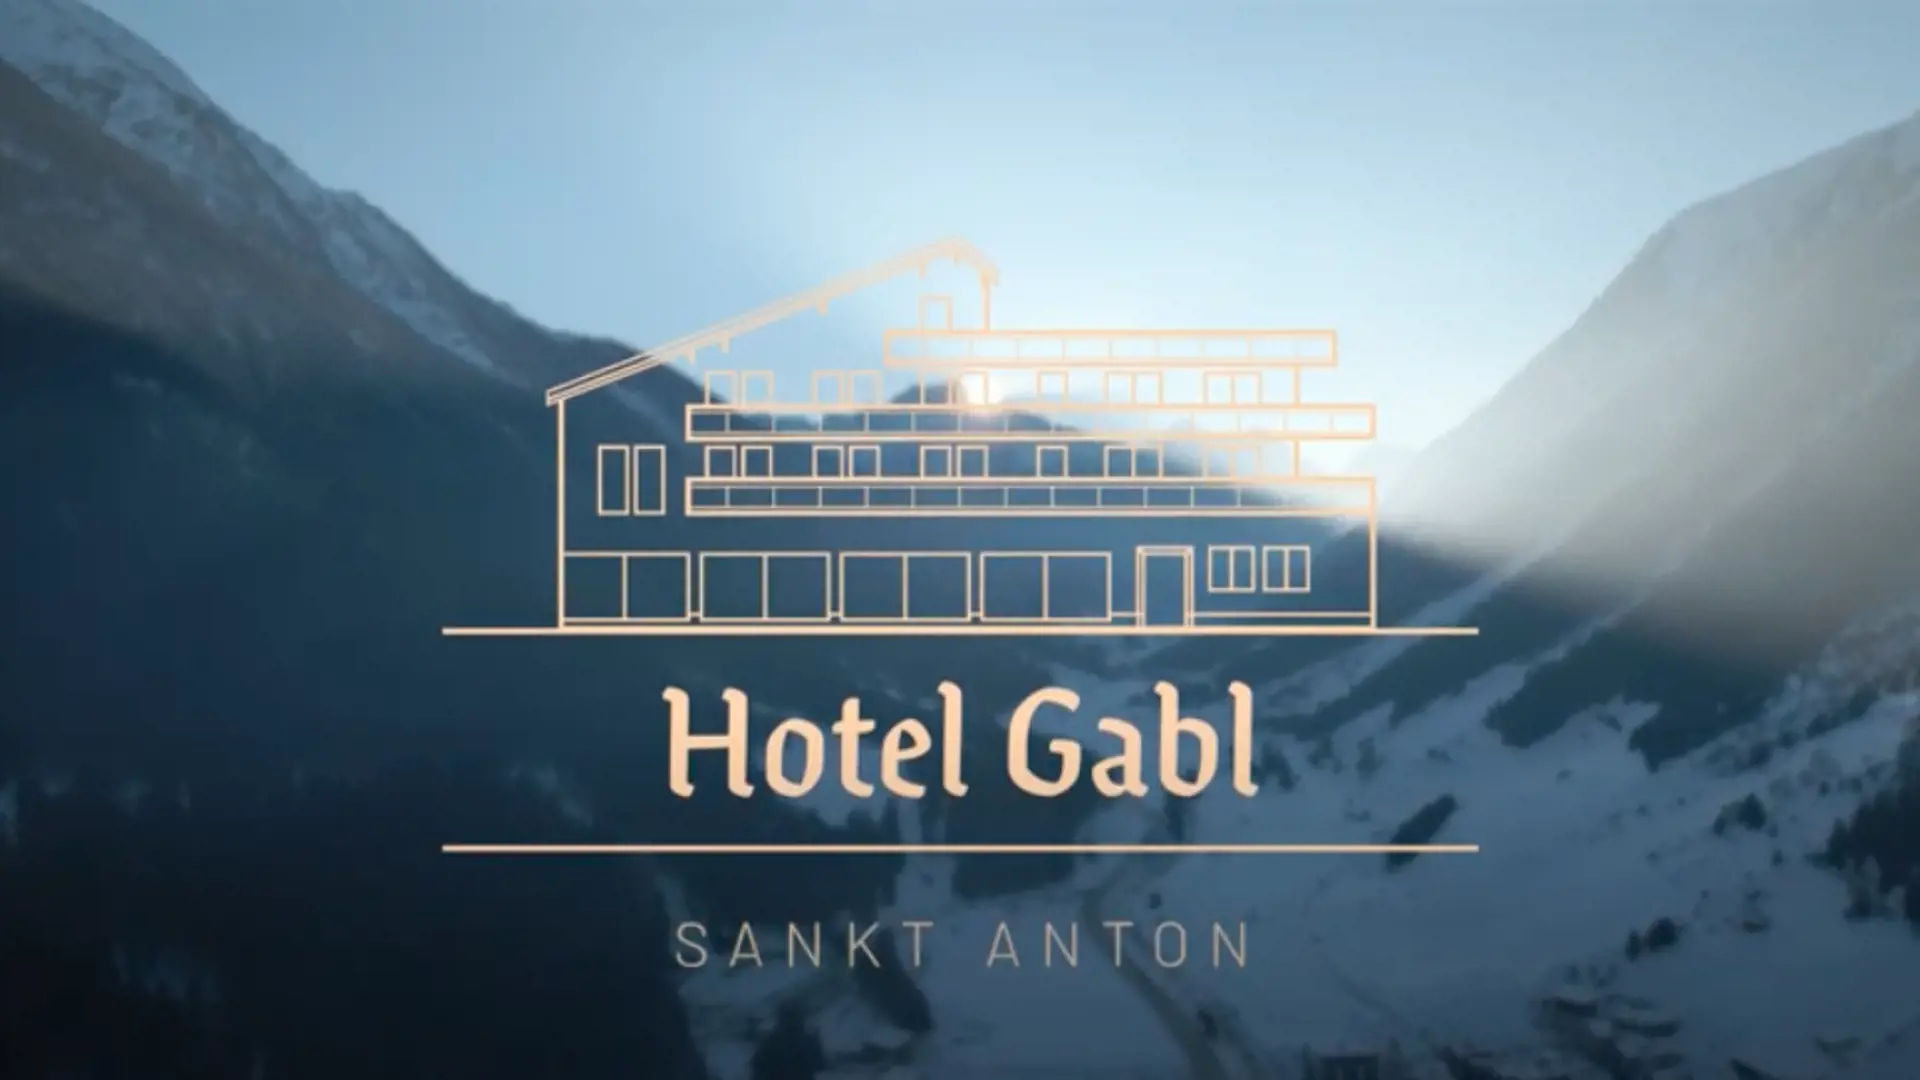 Hotel Gabl video LA